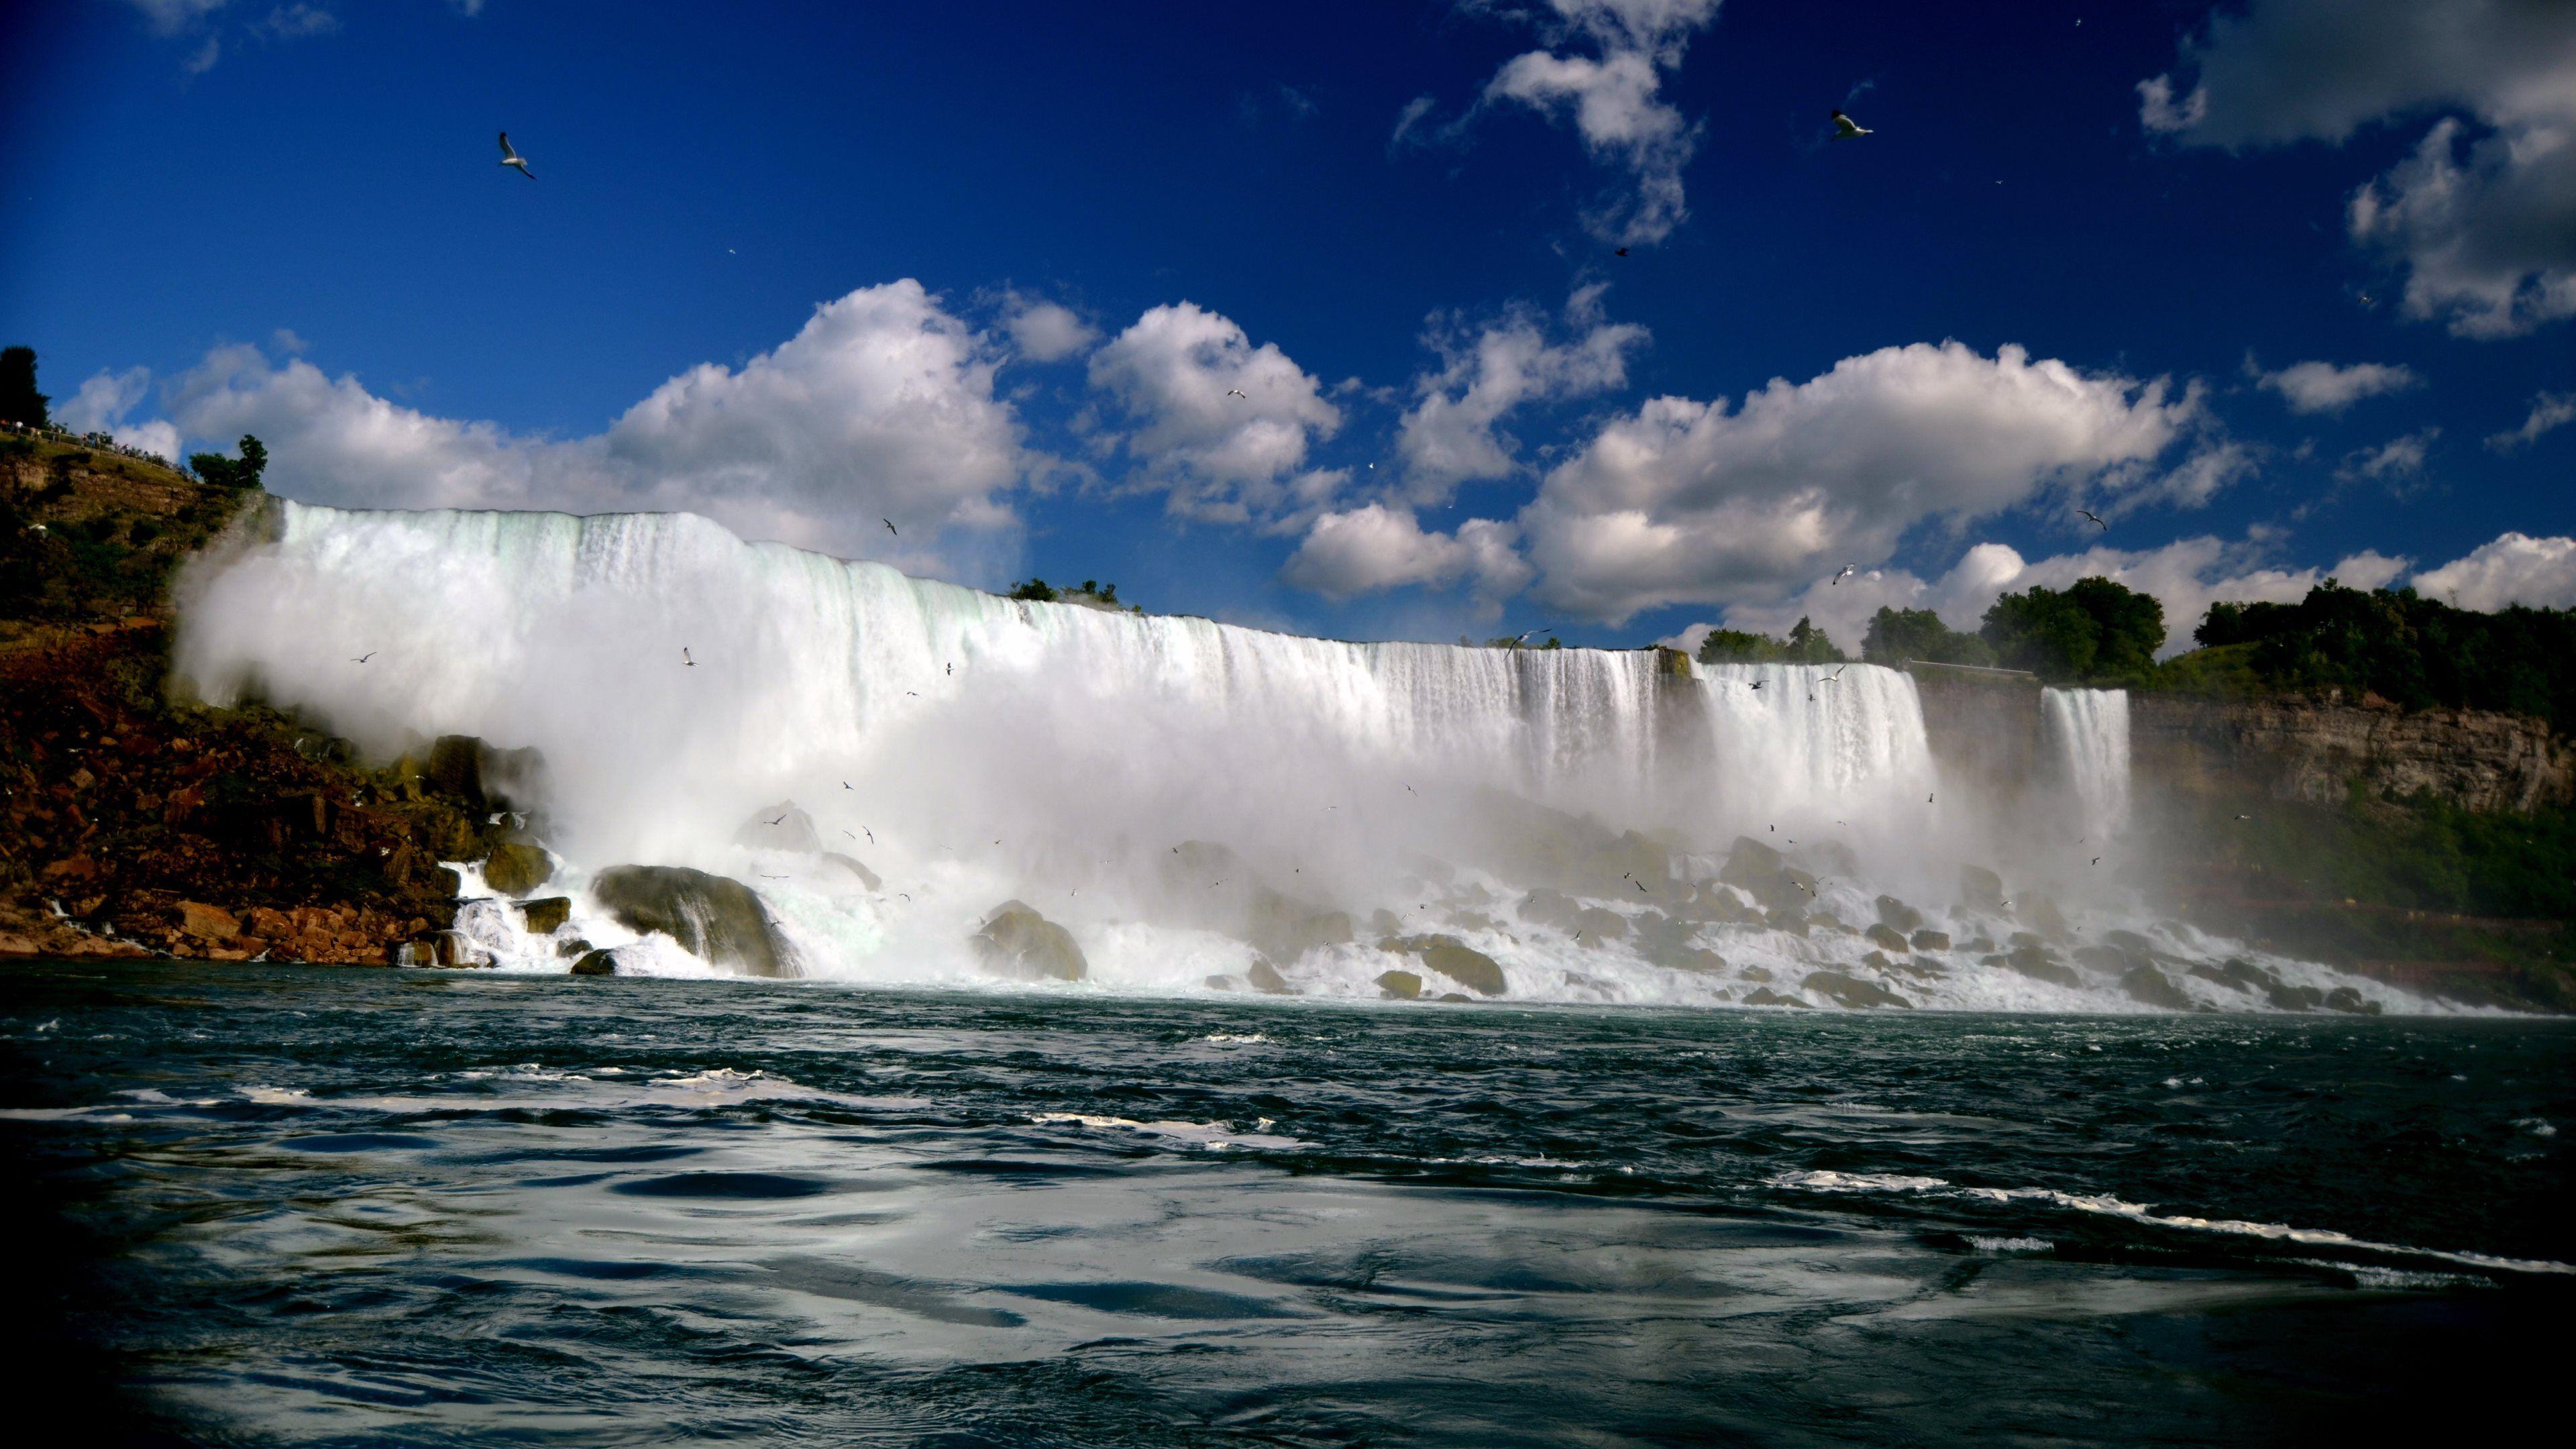 Niagara Falls Picture. Beautiful image HD Picture & Desktop